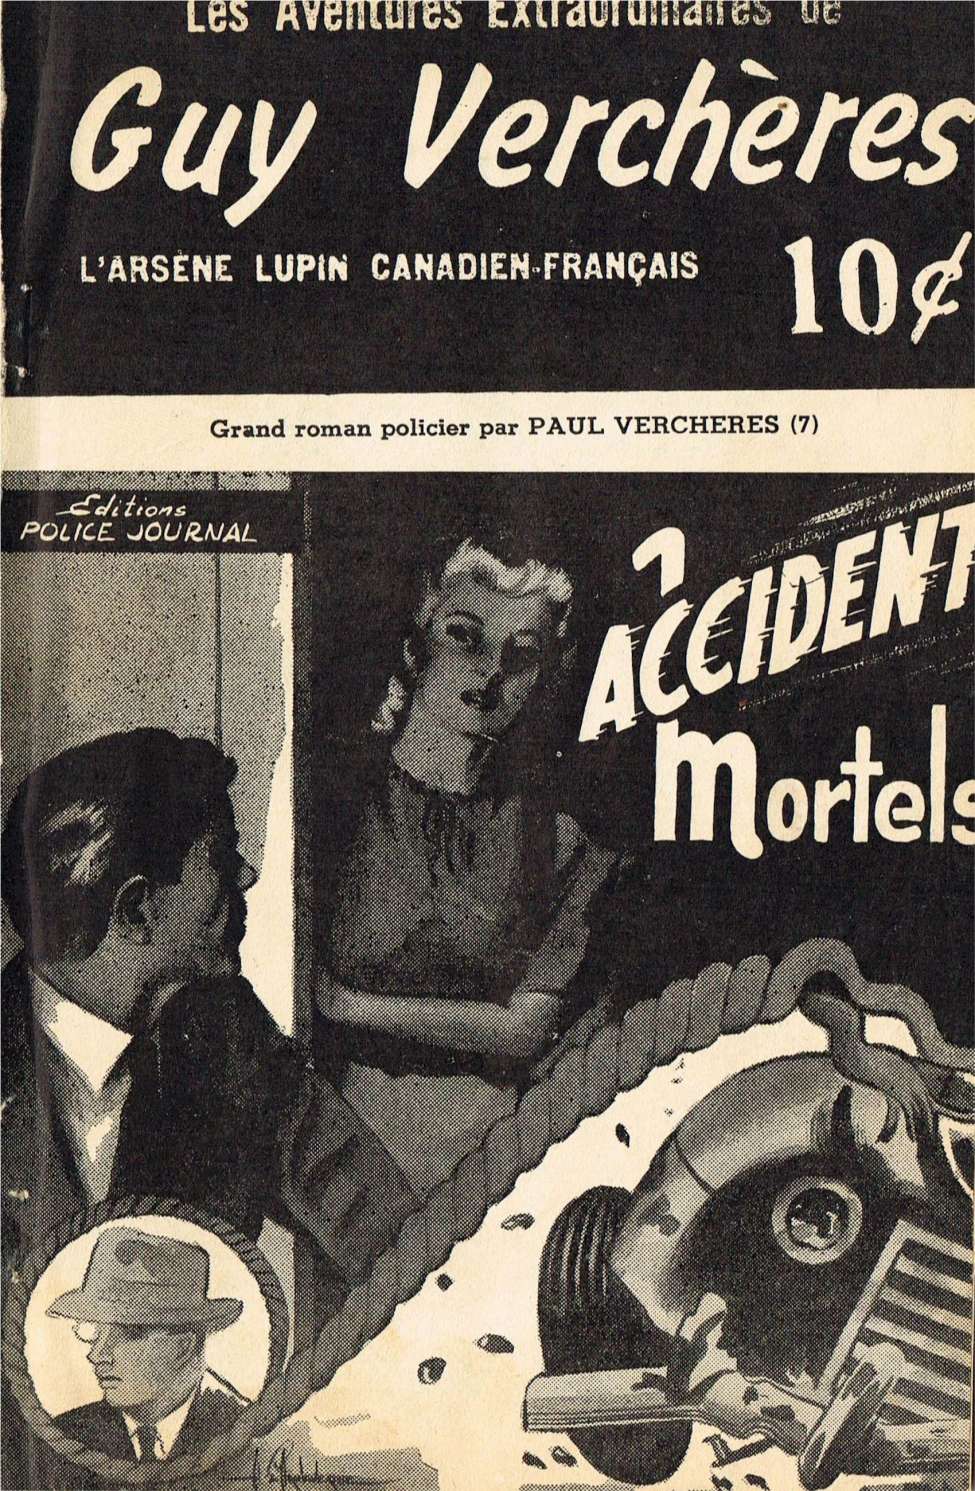 Book Cover For Guy-Vercheres v2 7 - Accidents mortels